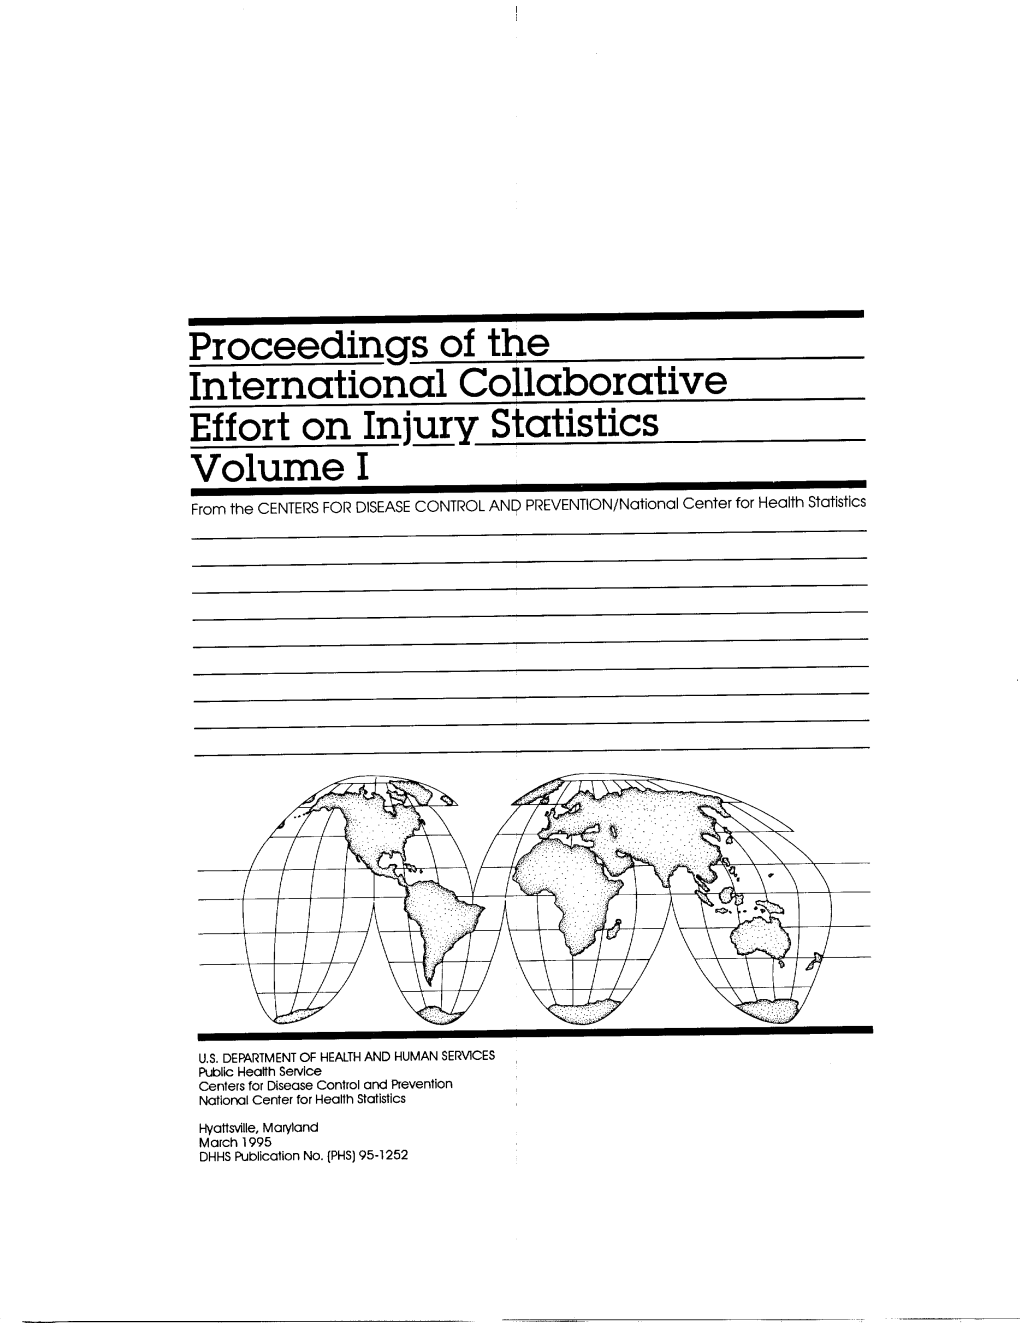 Proceedings of the International Collaborative Effort on Injury